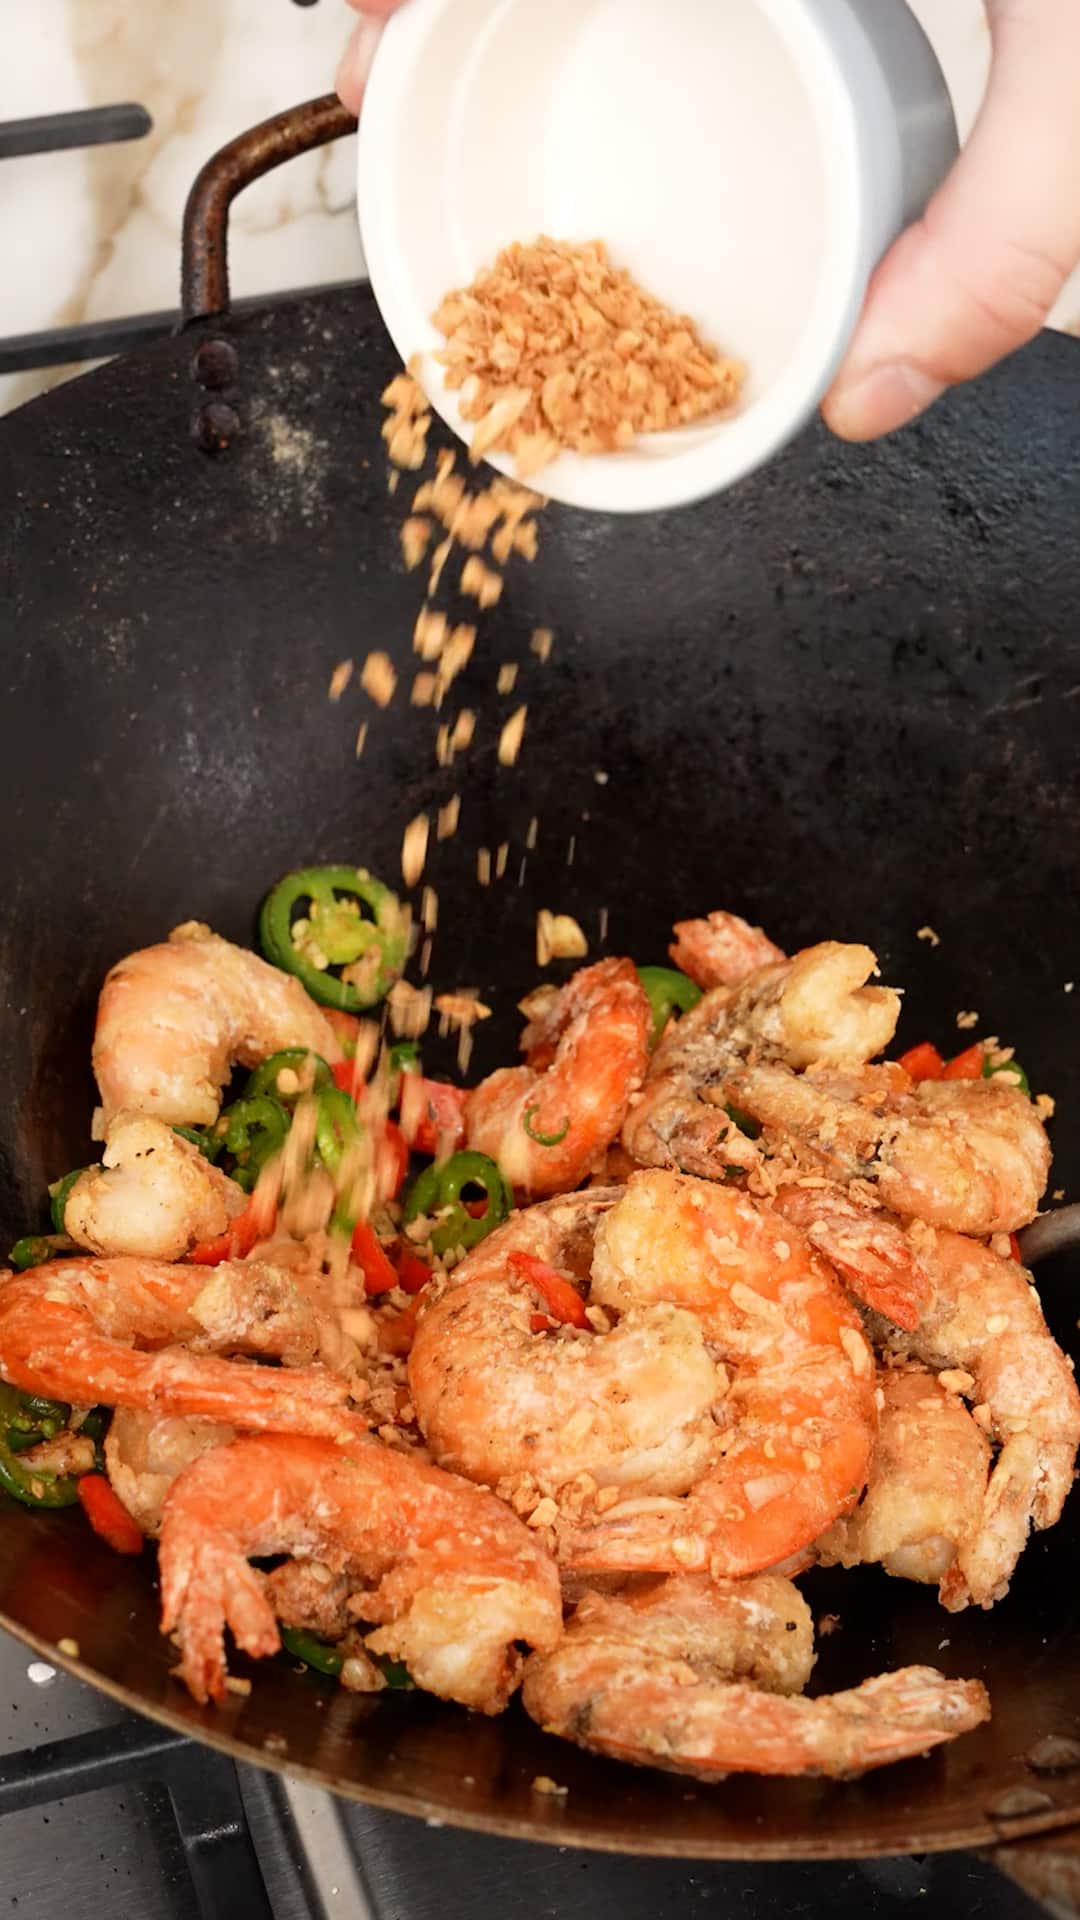 Fried garlic being added onto salt and pepper shrimp in a wok.